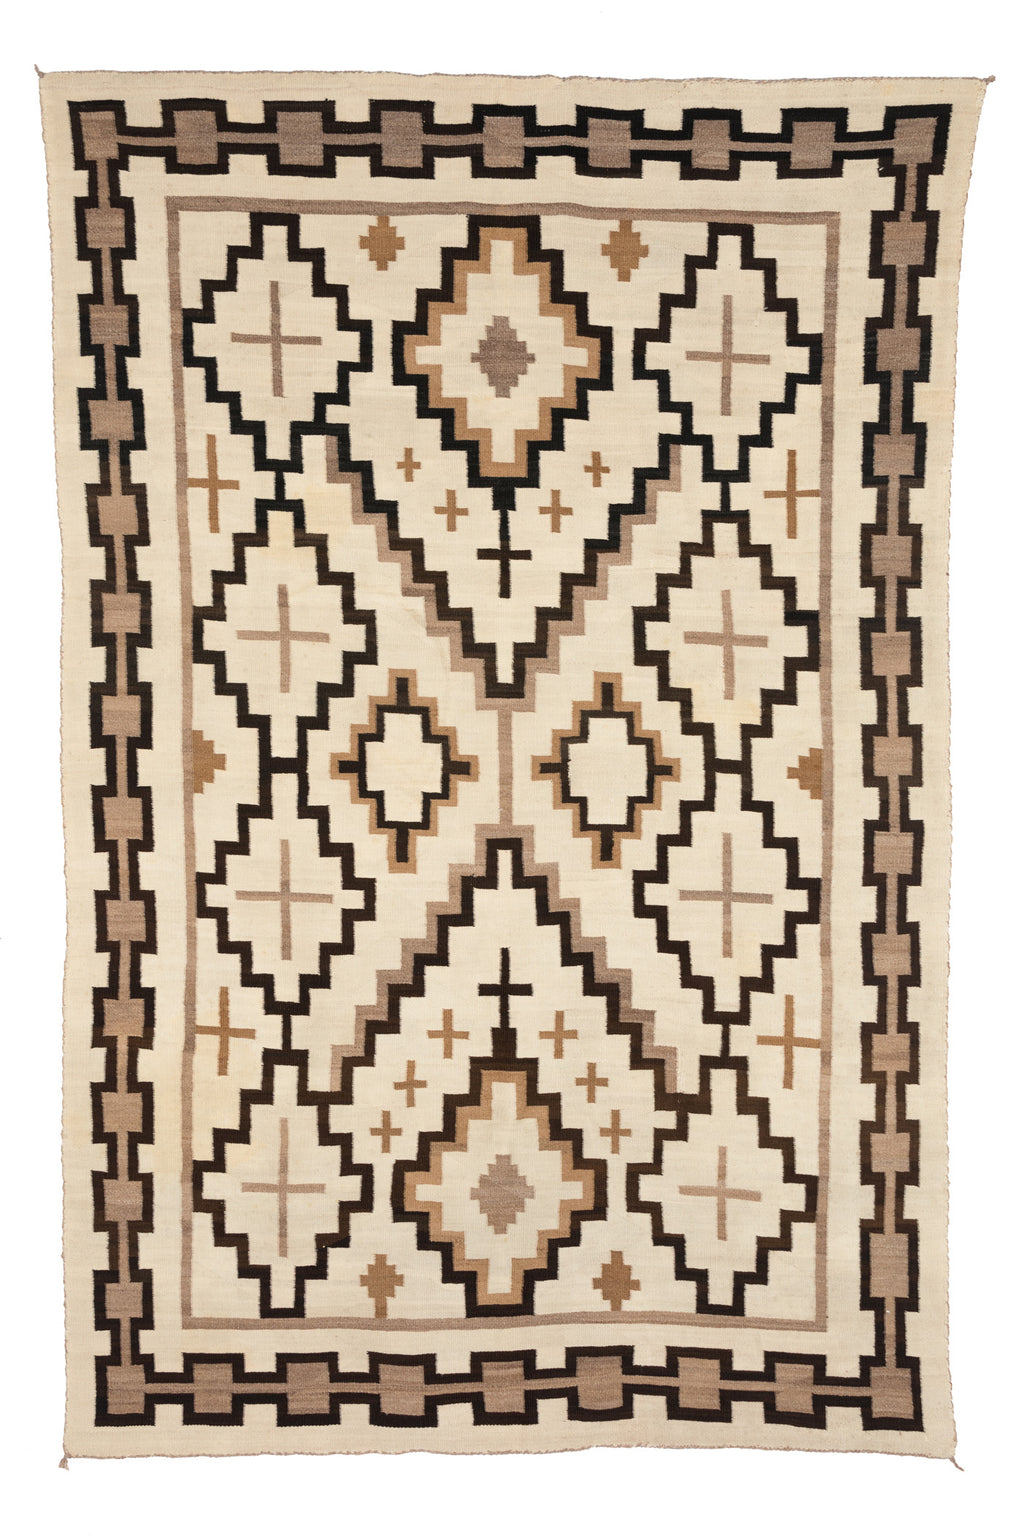 JB Moore/Crystal Navajo Weaving : Historic : PC 110 - Getzwiller's Nizhoni Ranch Gallery